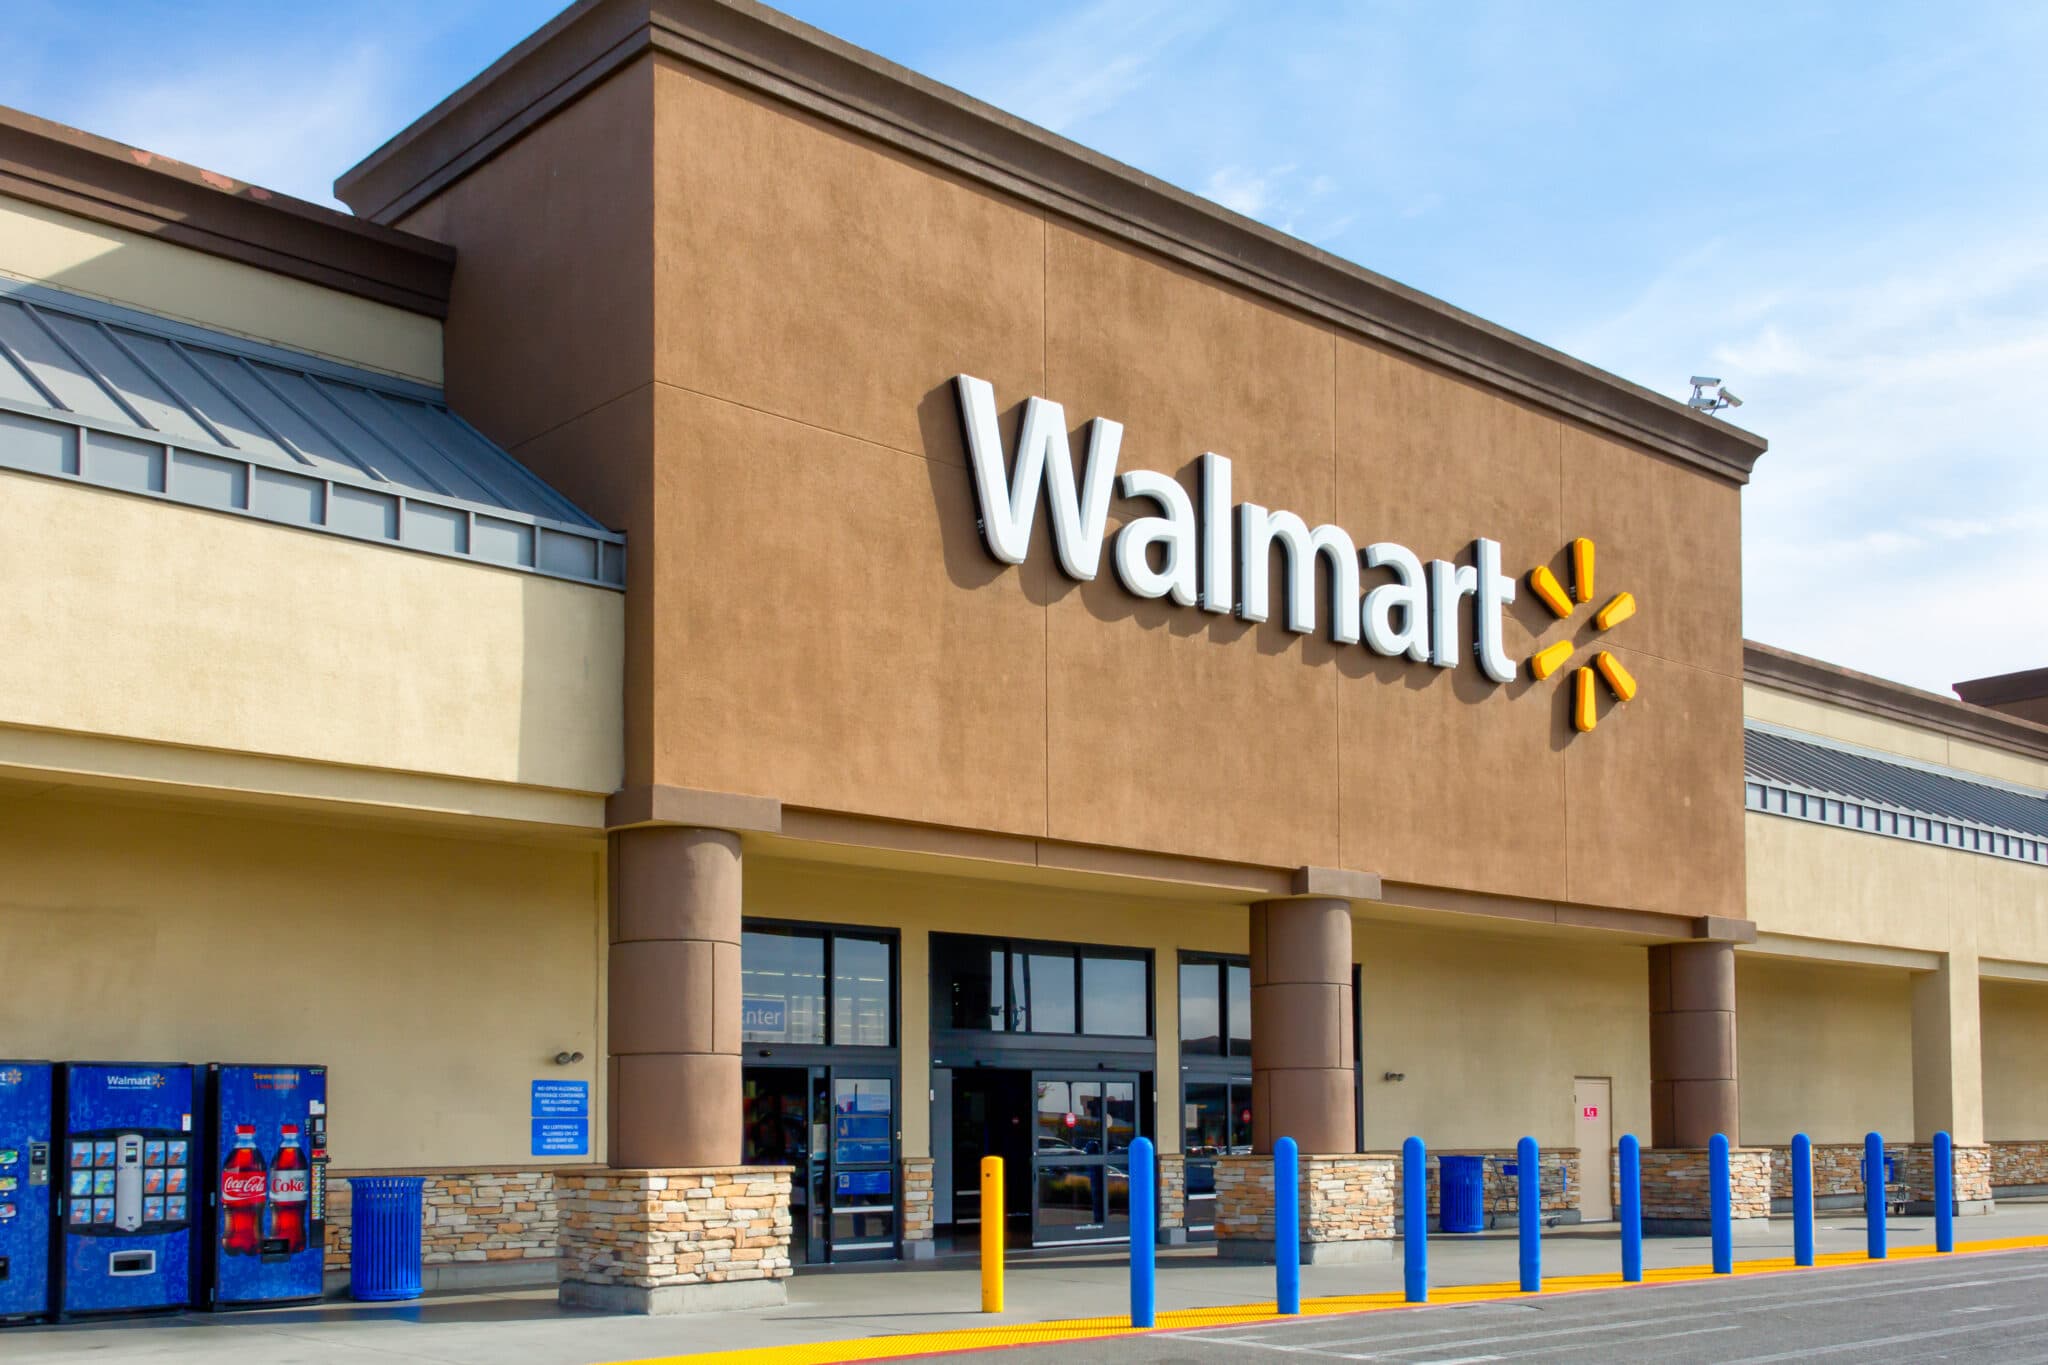 The Walmart in Vine City will reopen